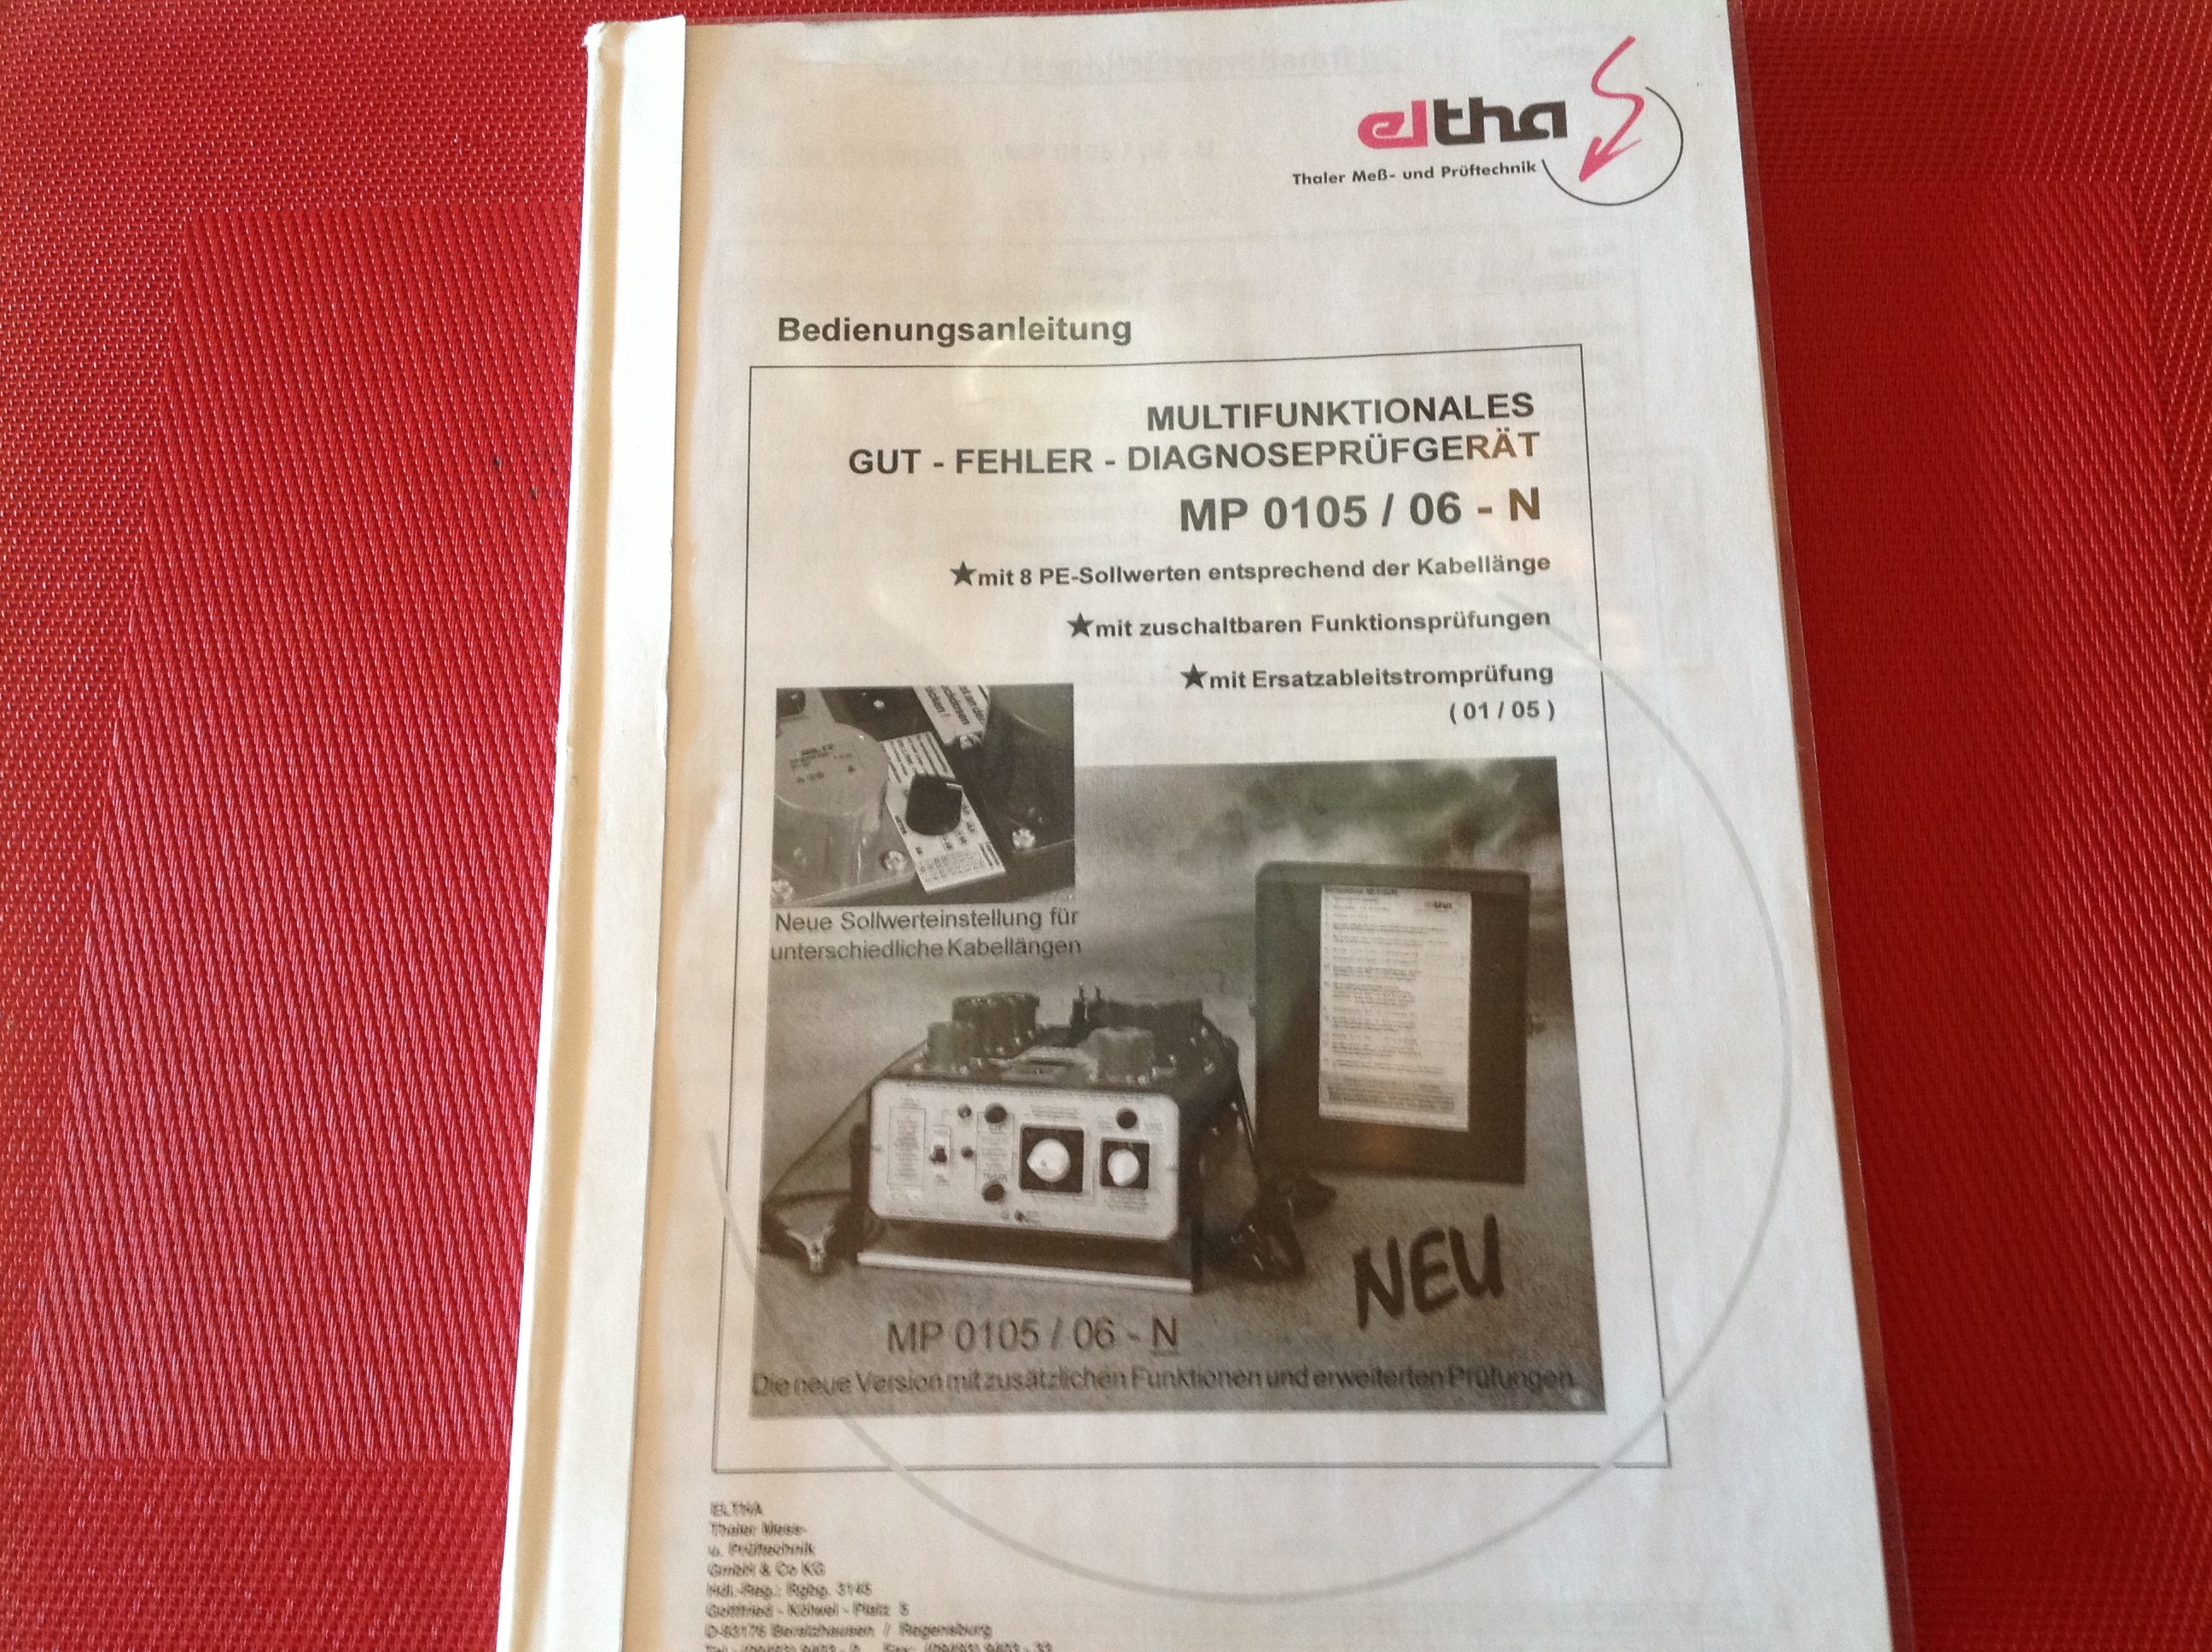 Eltha Multifunktionales Gut-Fehler-Diagnoseprüfgerät MP 0105/06-N